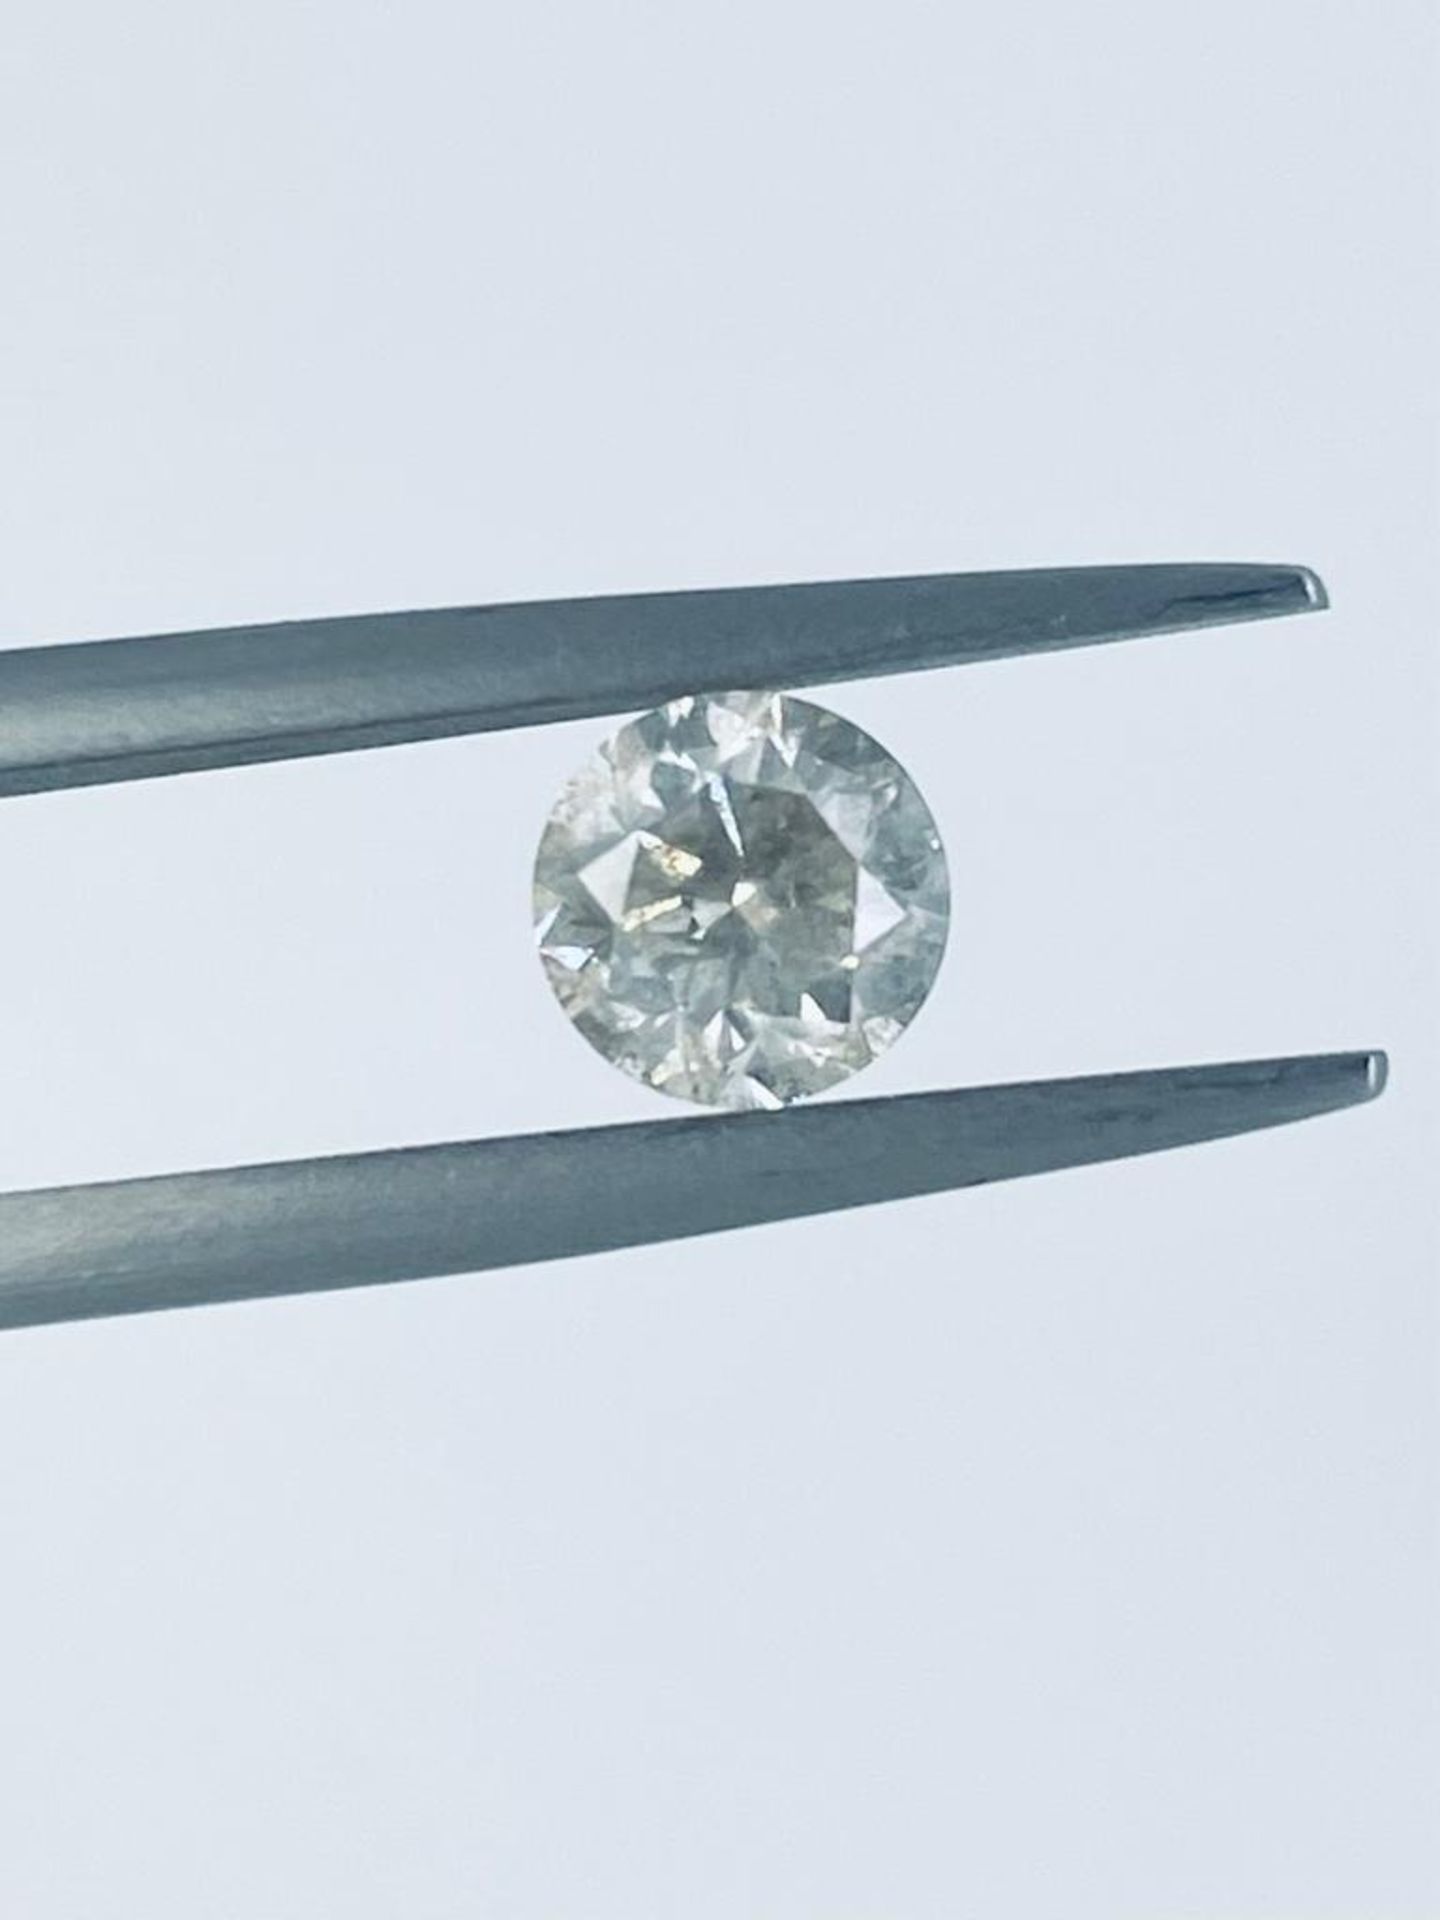 1 DIAMOND 1,07 CT K - I1 - SHAPE BRILLANT - CERT ID - C20408-37 - Image 2 of 4